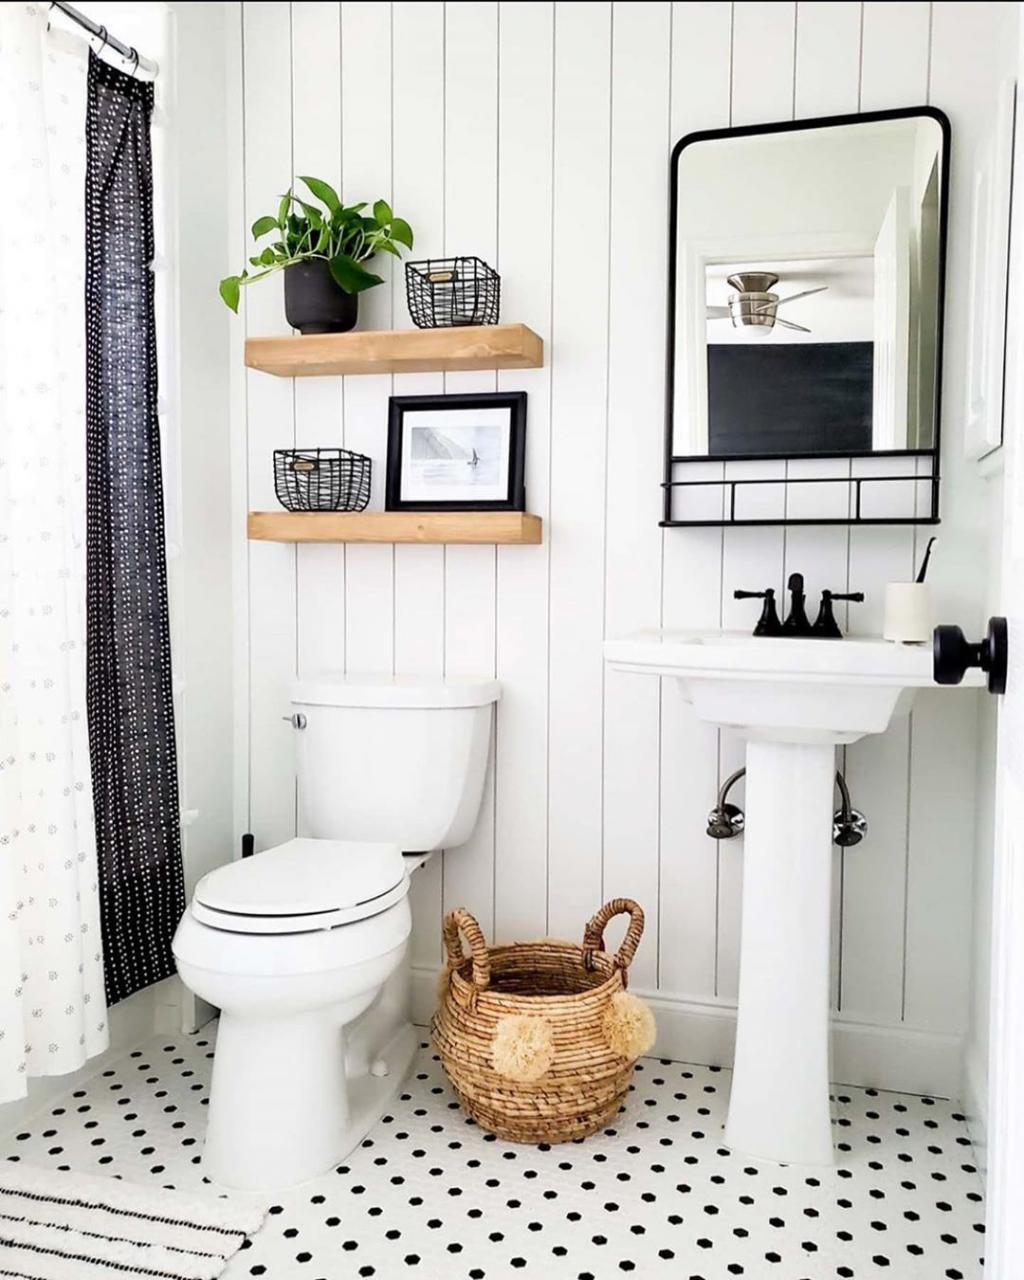 Mid Century•Boho•Farmhouse on Instagram “This bathroom turned out